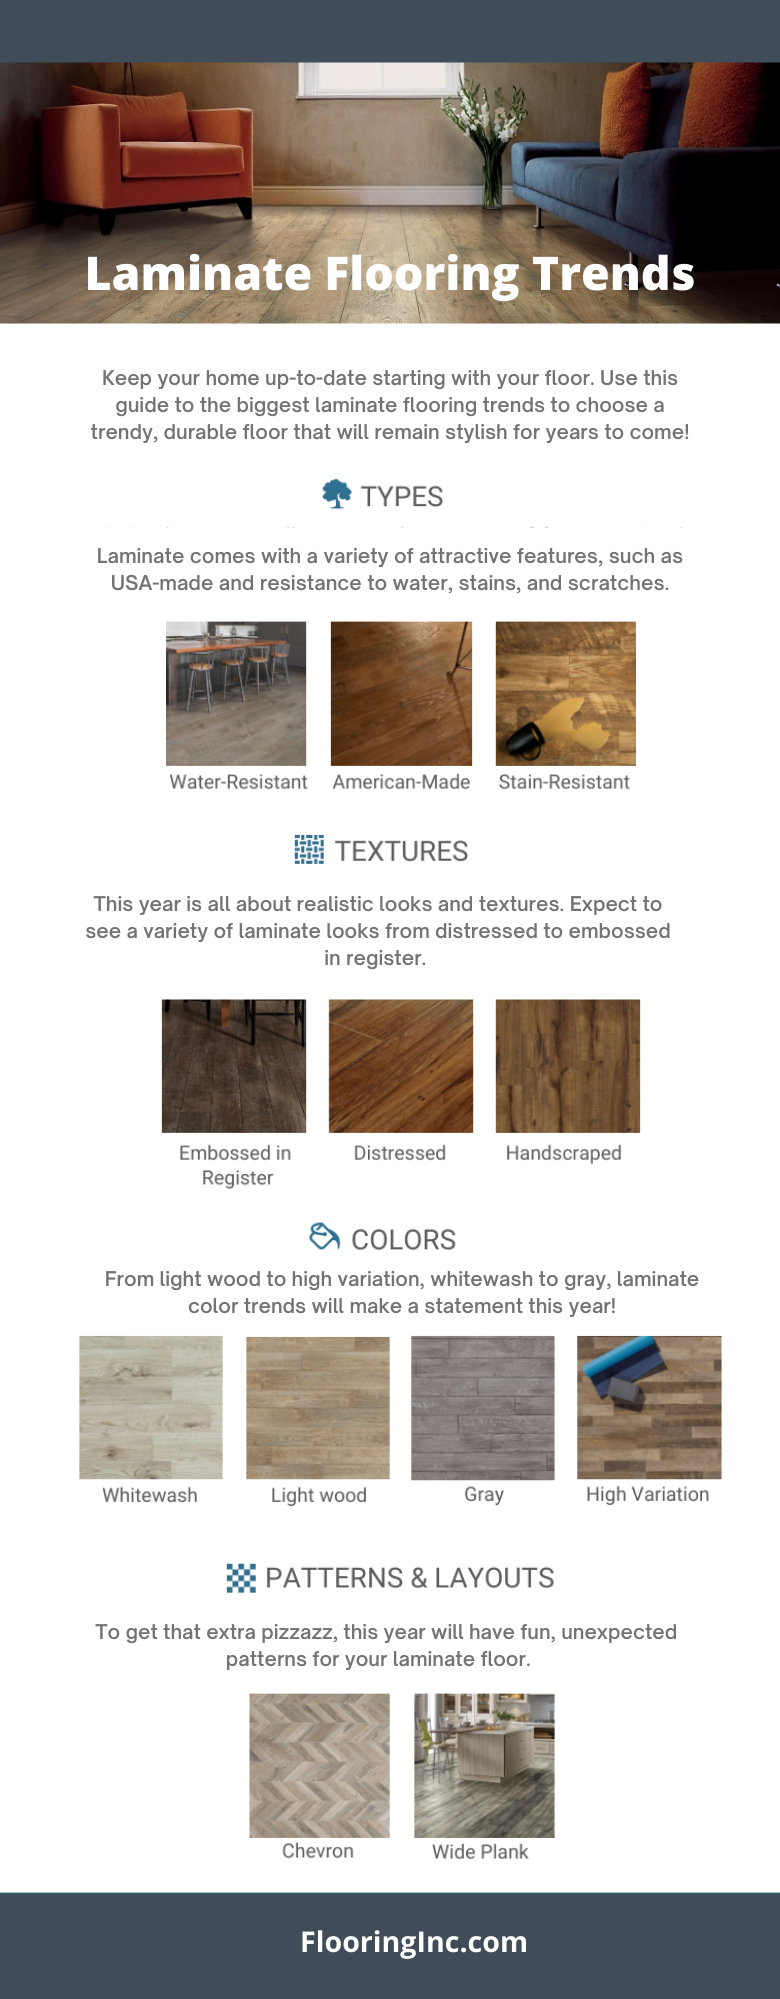 What Is Laminate Flooring?